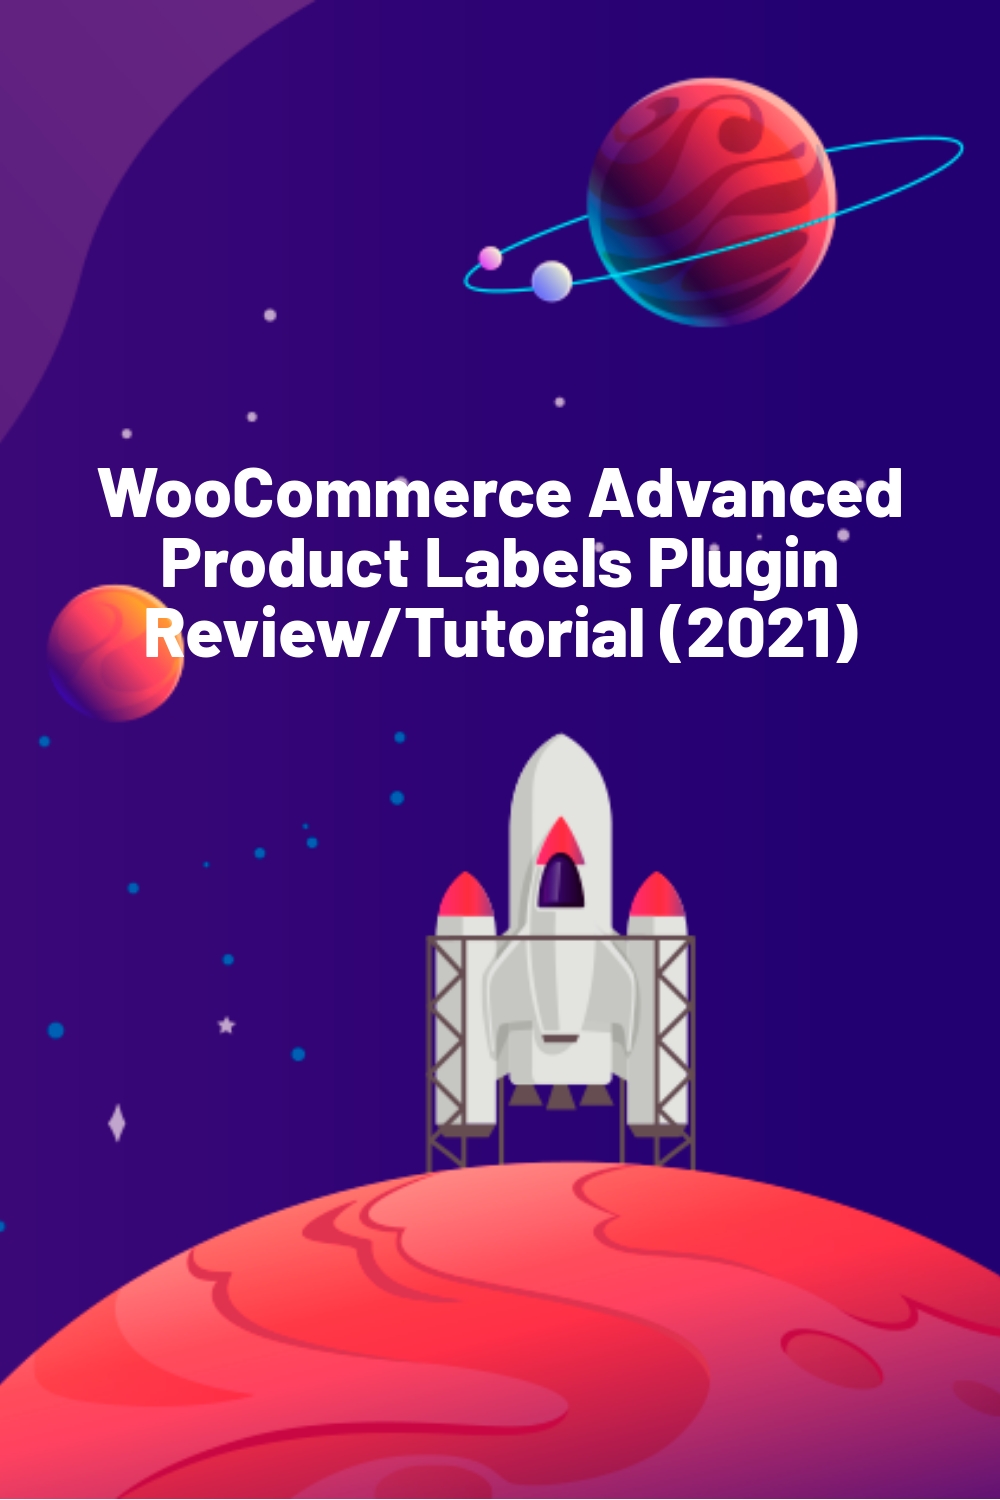 Test/Tutoriel du plugin WooCommerce Advanced Product Labels (2021)